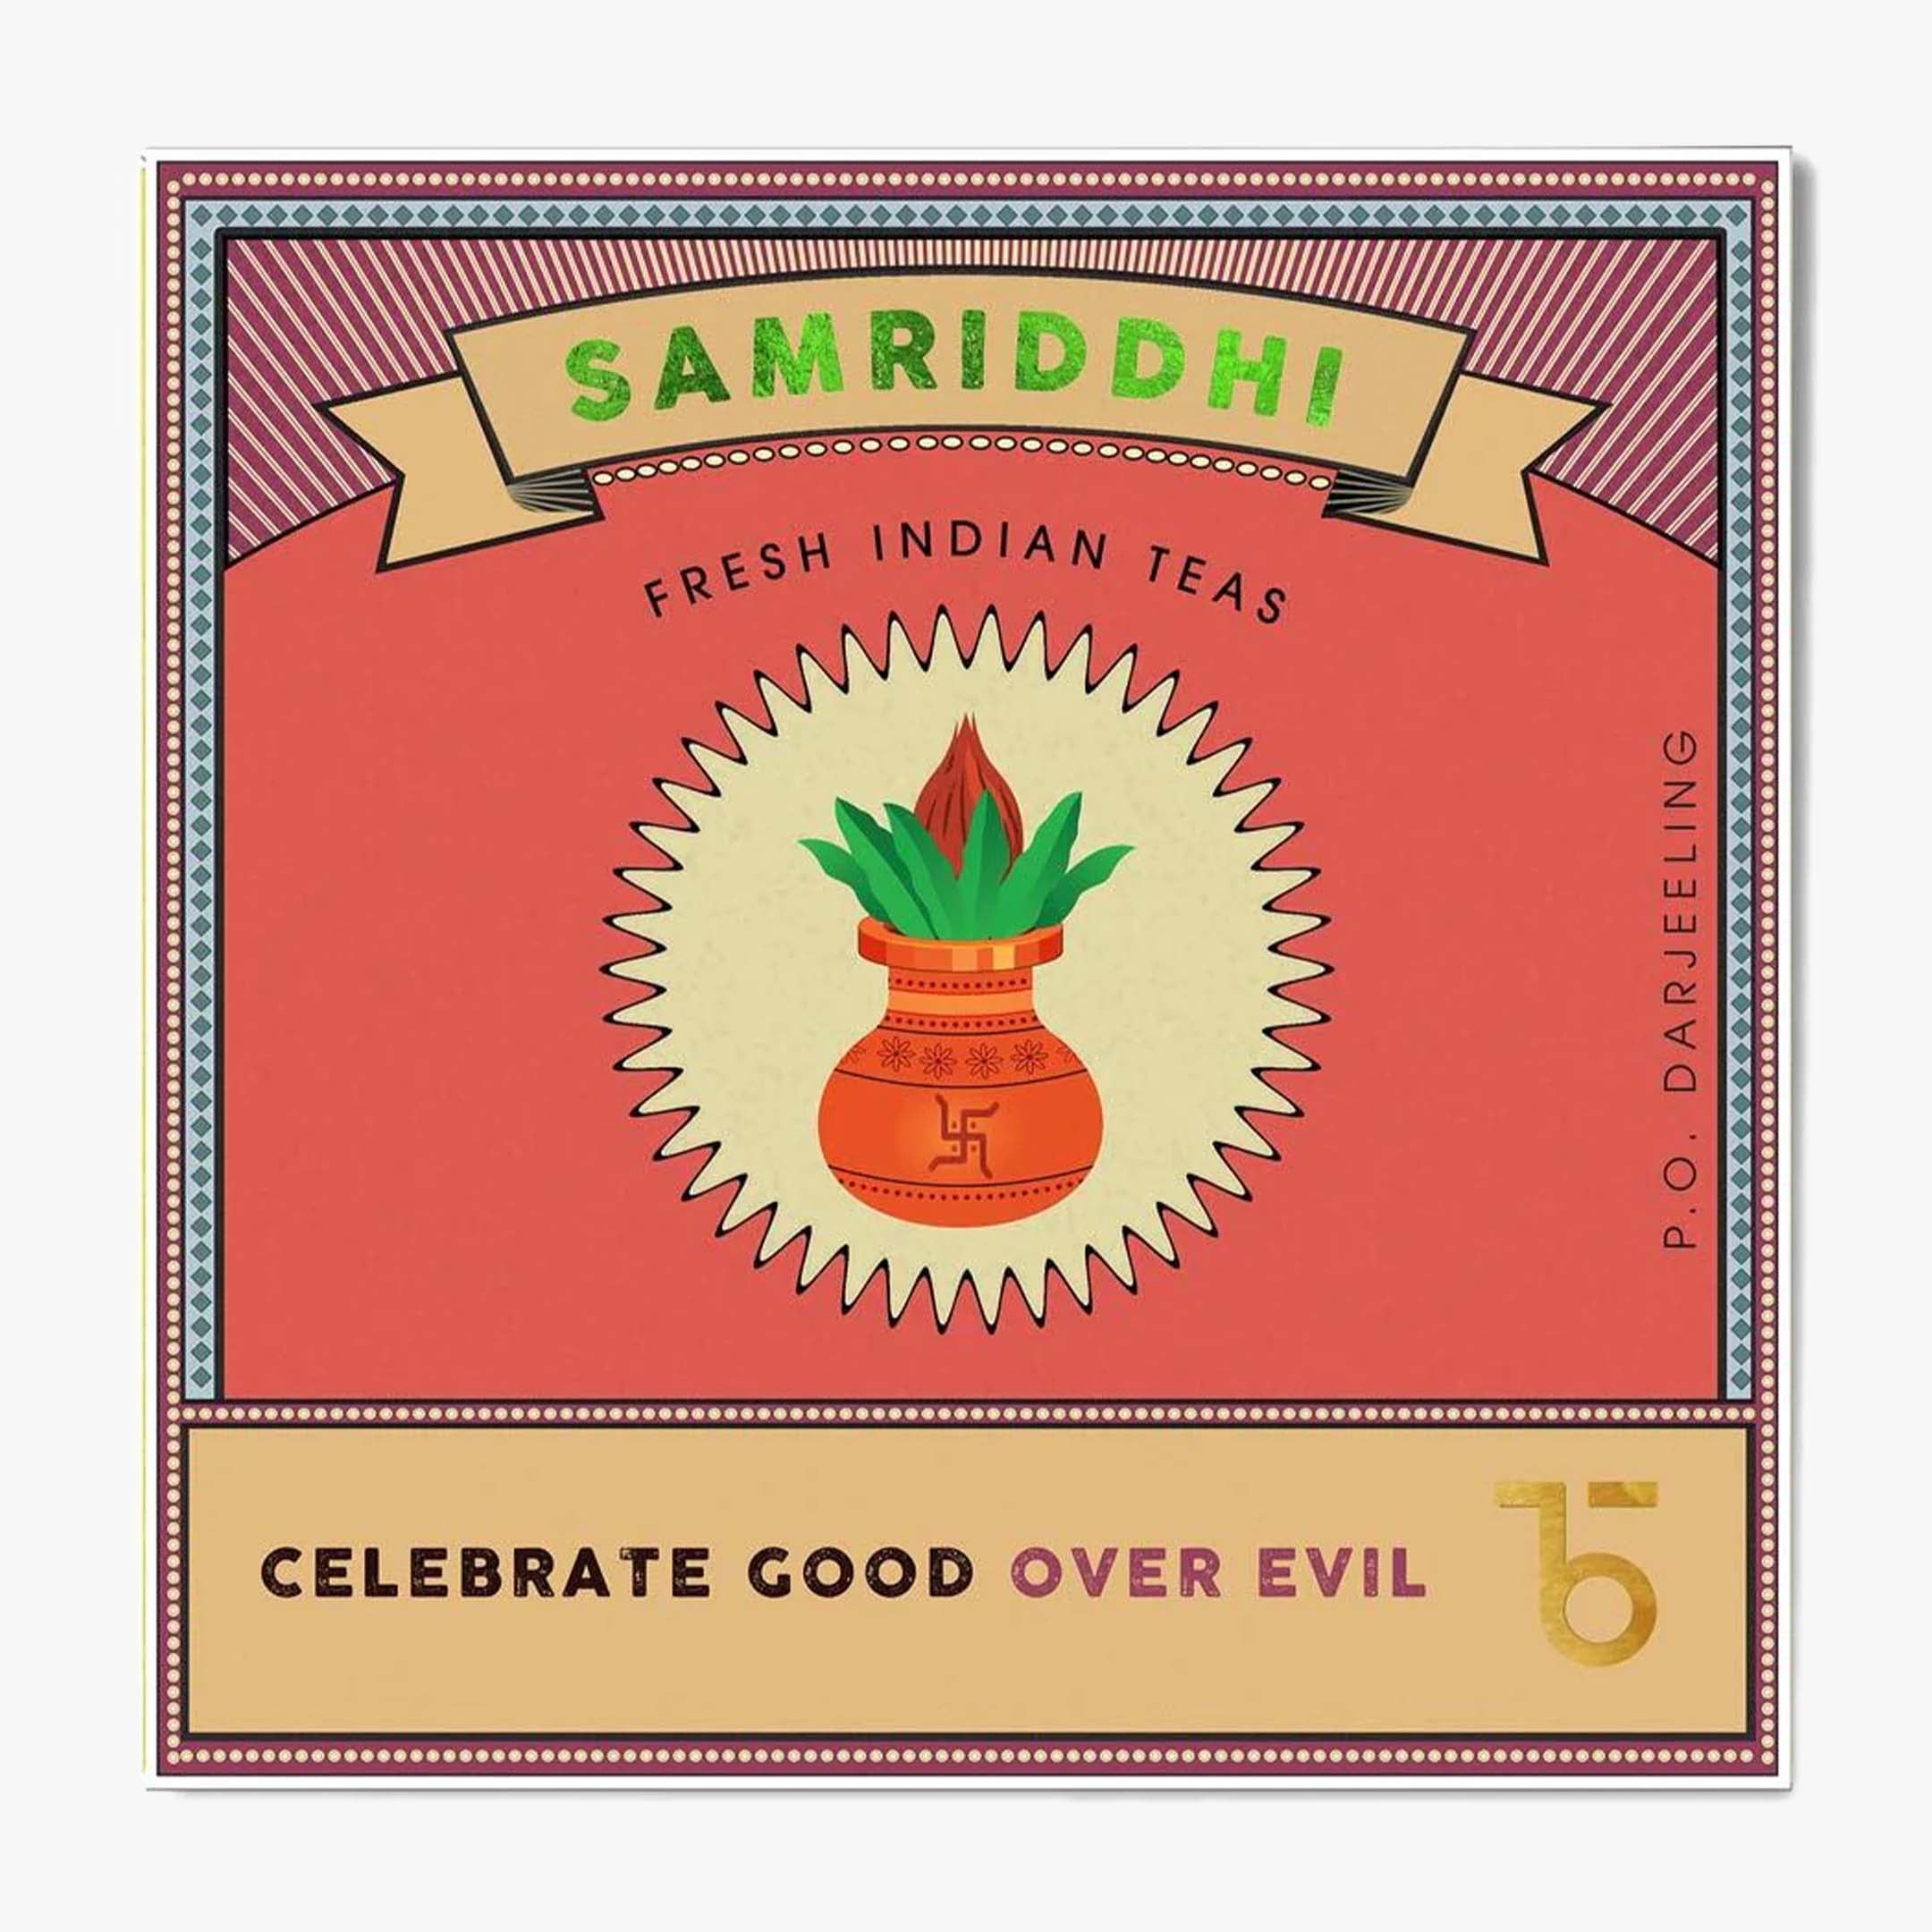 Samriddhi - The Gift of Teabox Classics